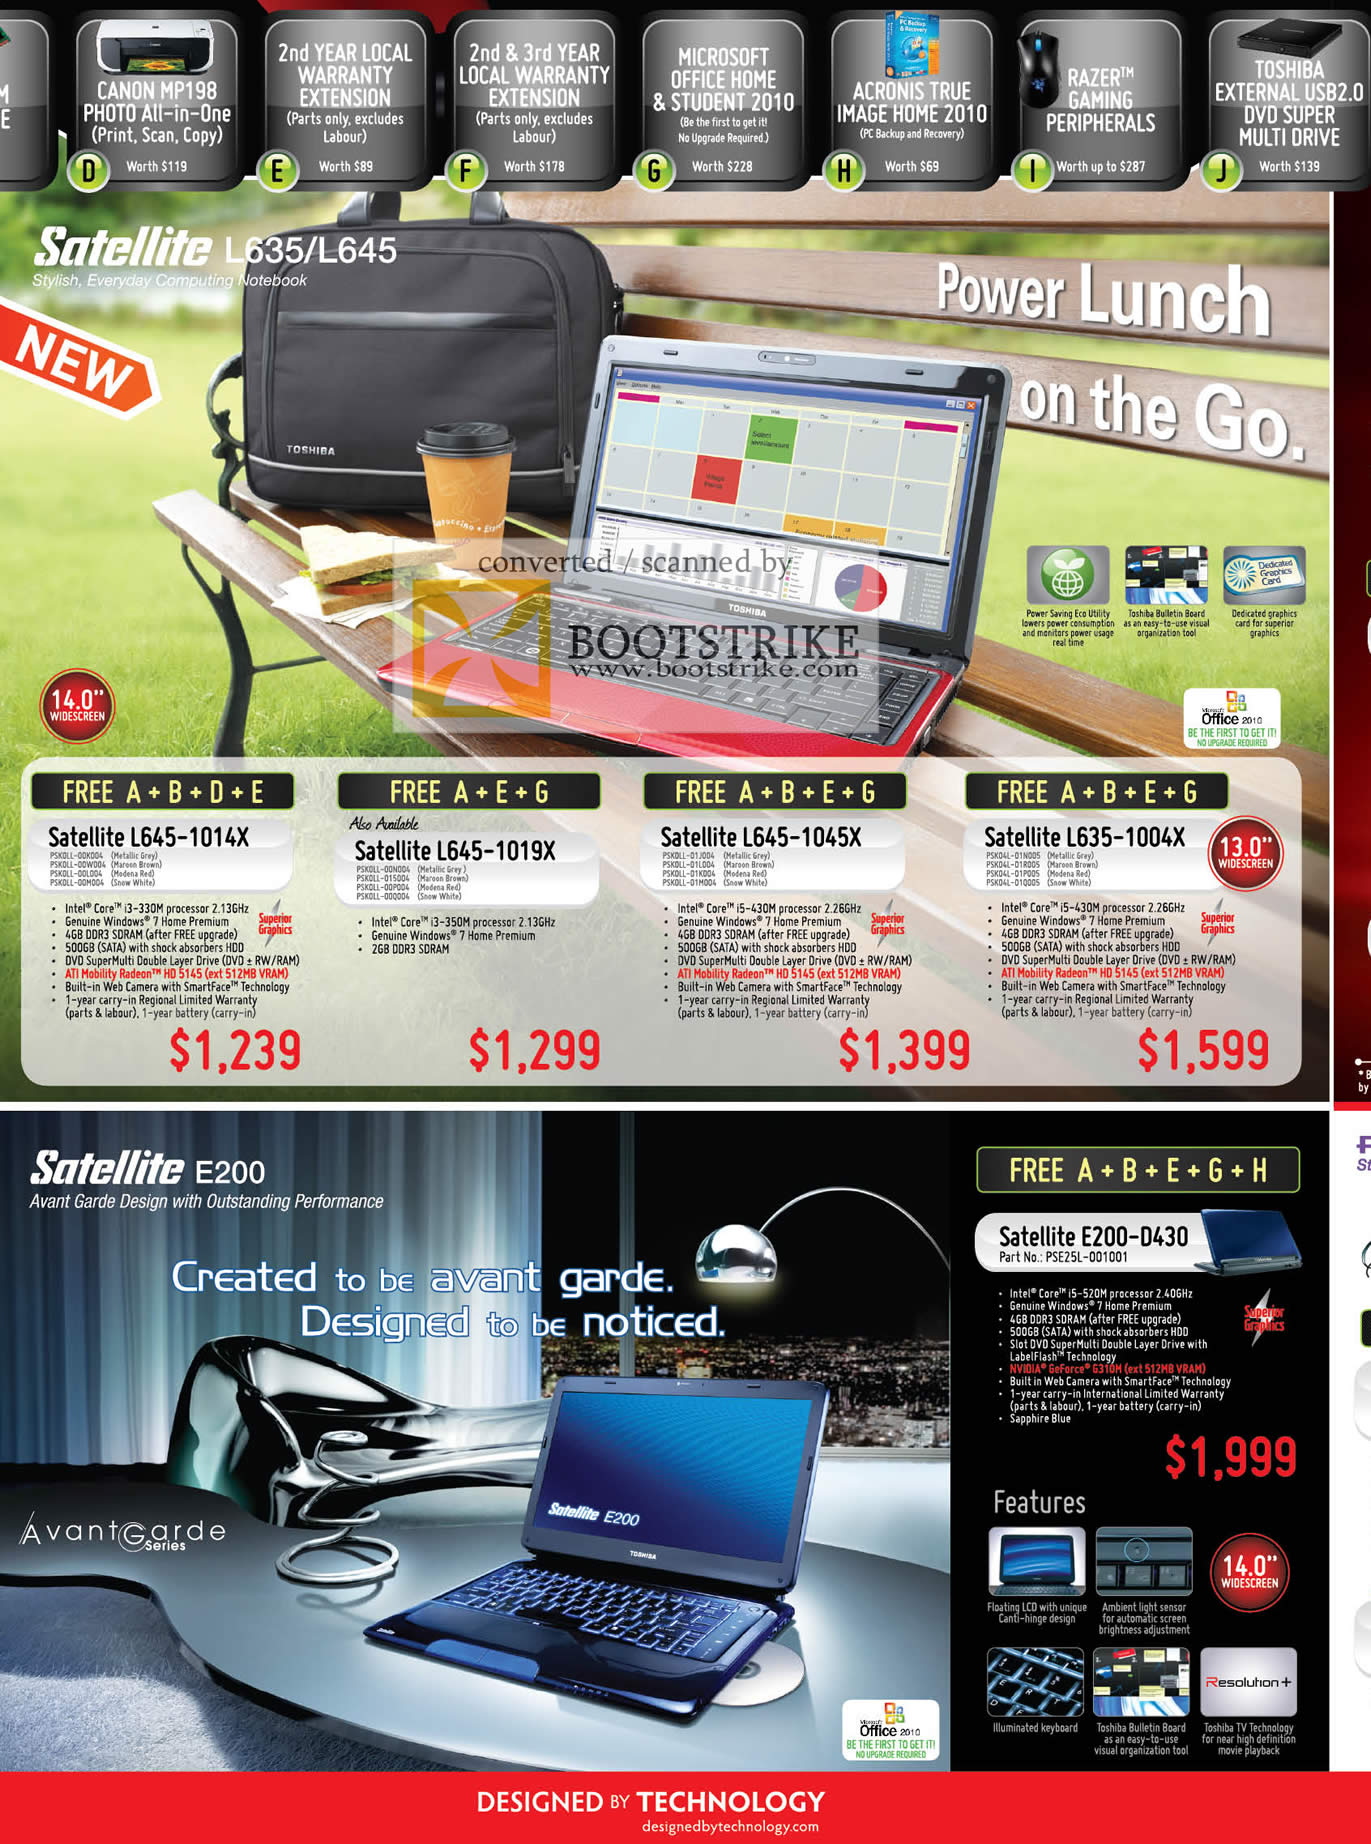 PC Show 2010 price list image brochure of Toshiba Notebooks Satellite L645 L635 1014X 1019X 1045X 1004X E200 D430